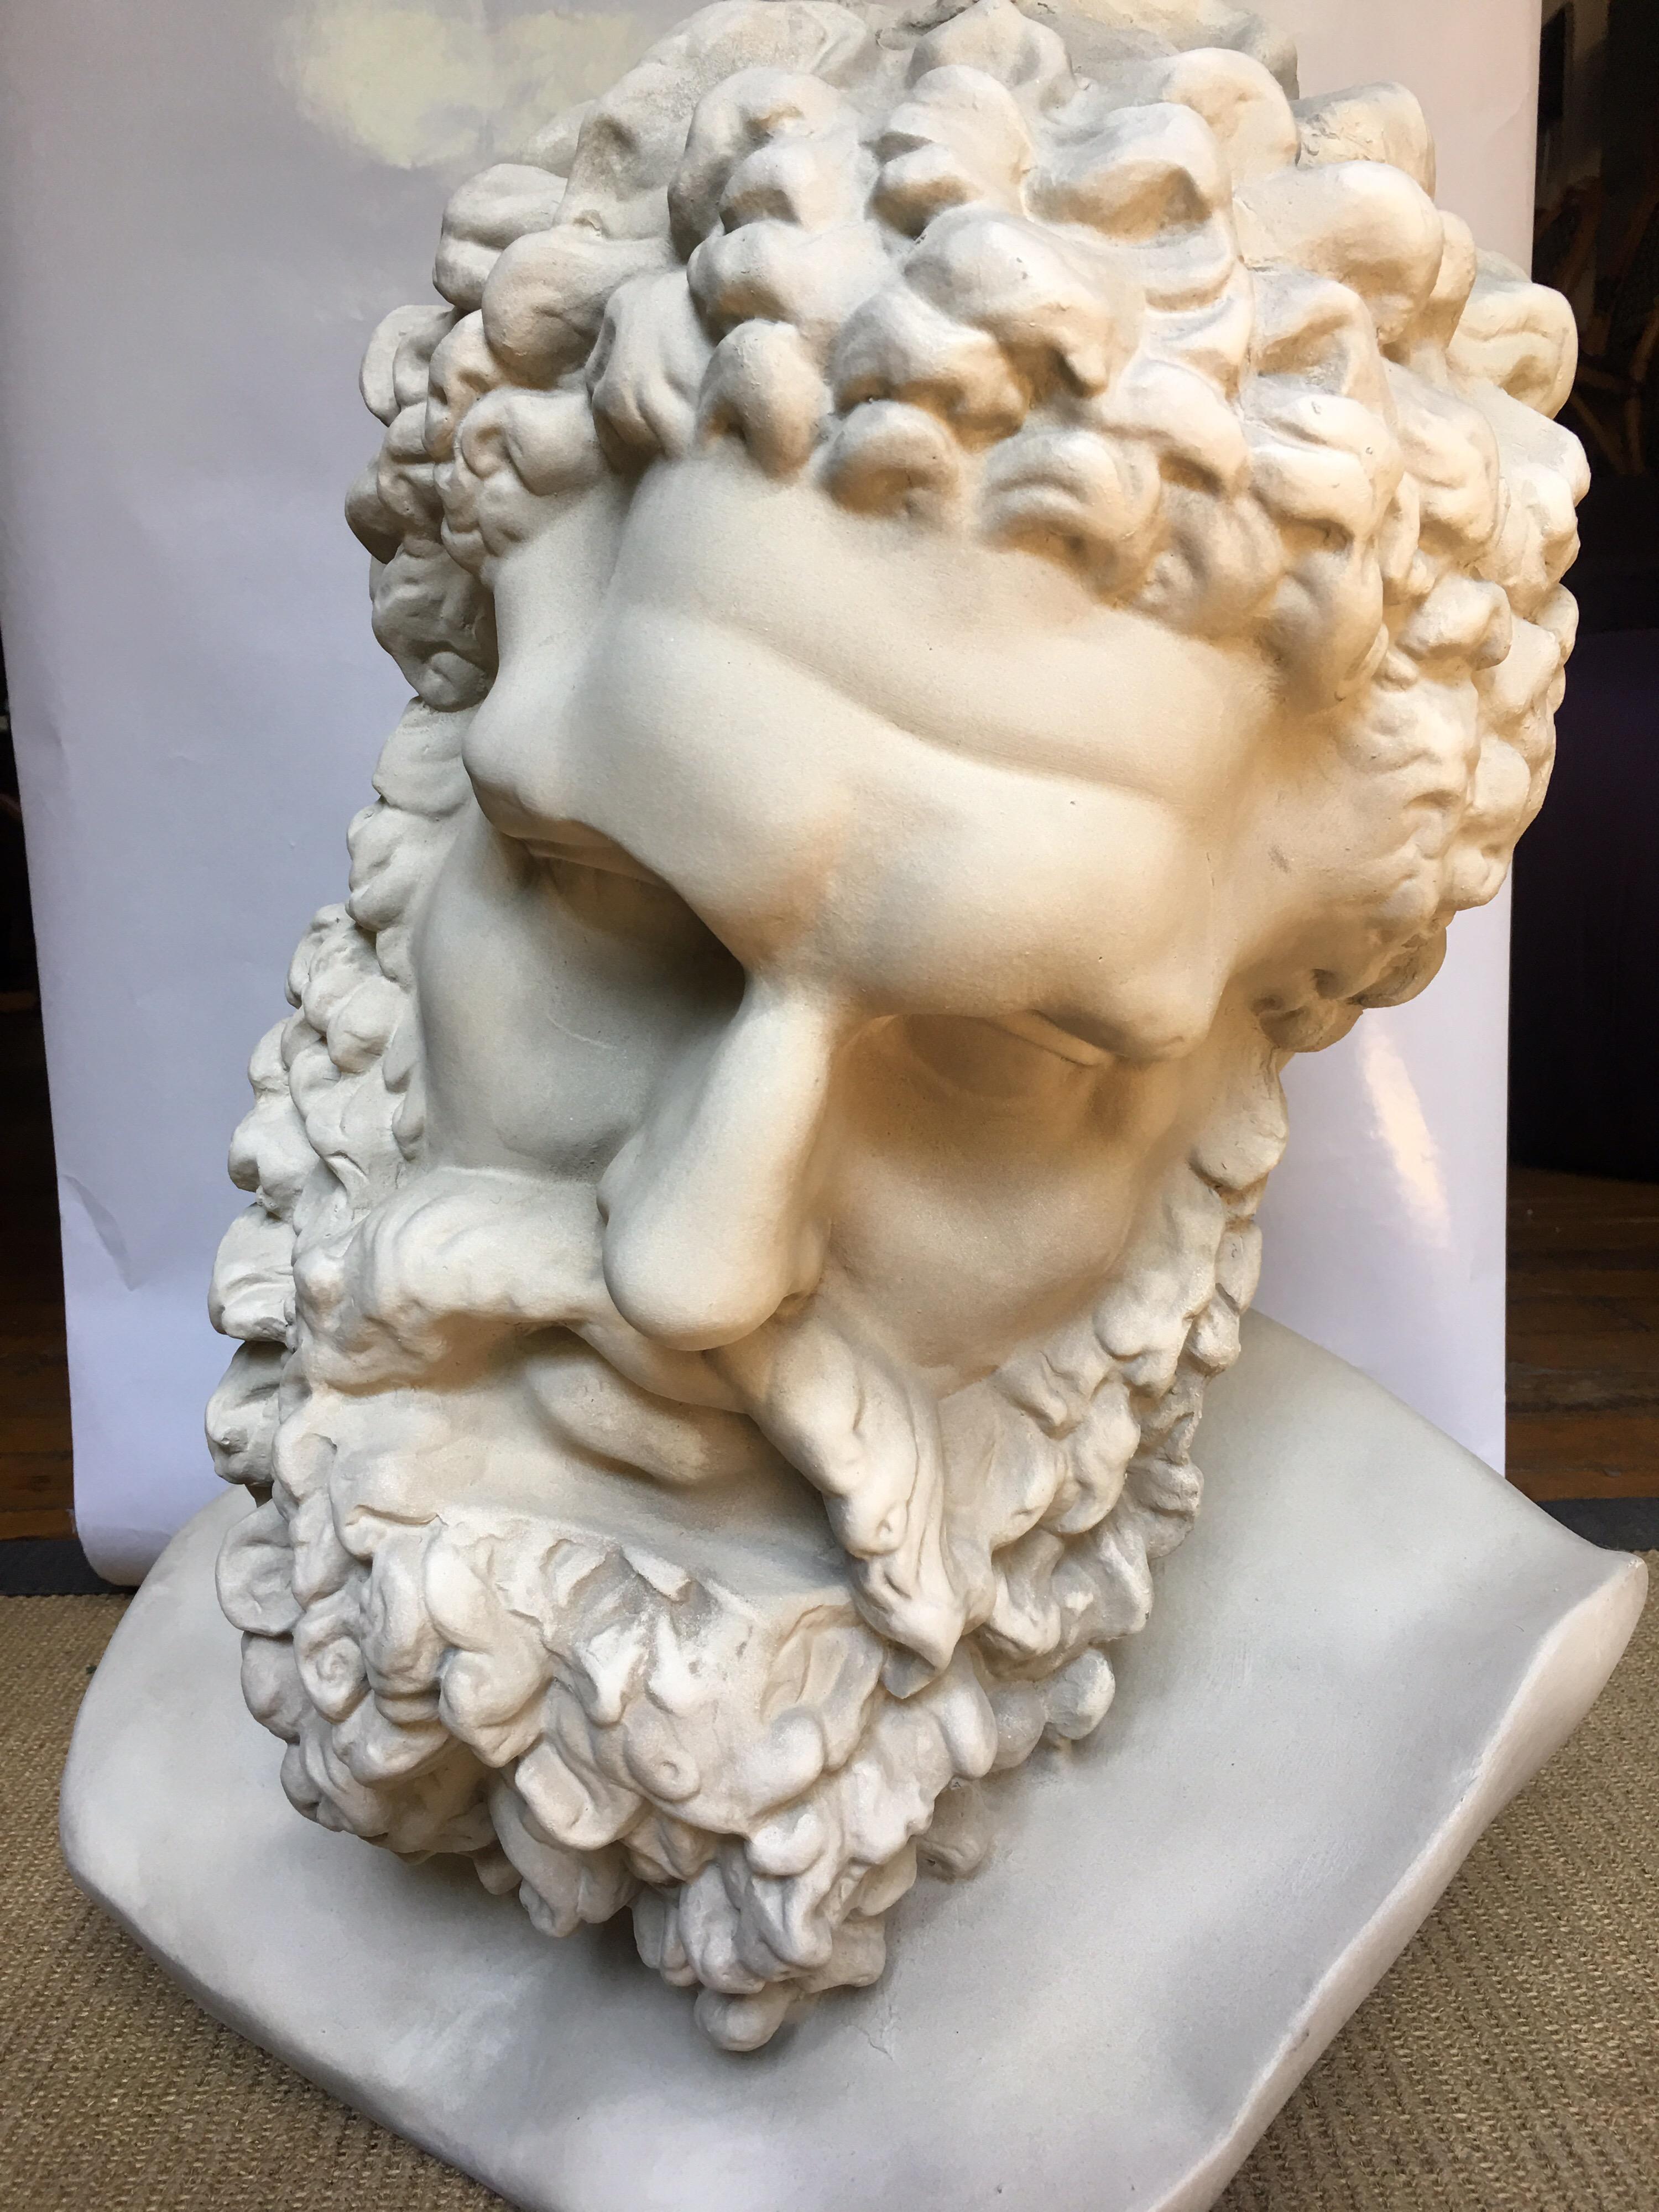 Large Greek Roman style bust of Hercules. Sculpture is crafted of lightweight fiber stone fiberglass.